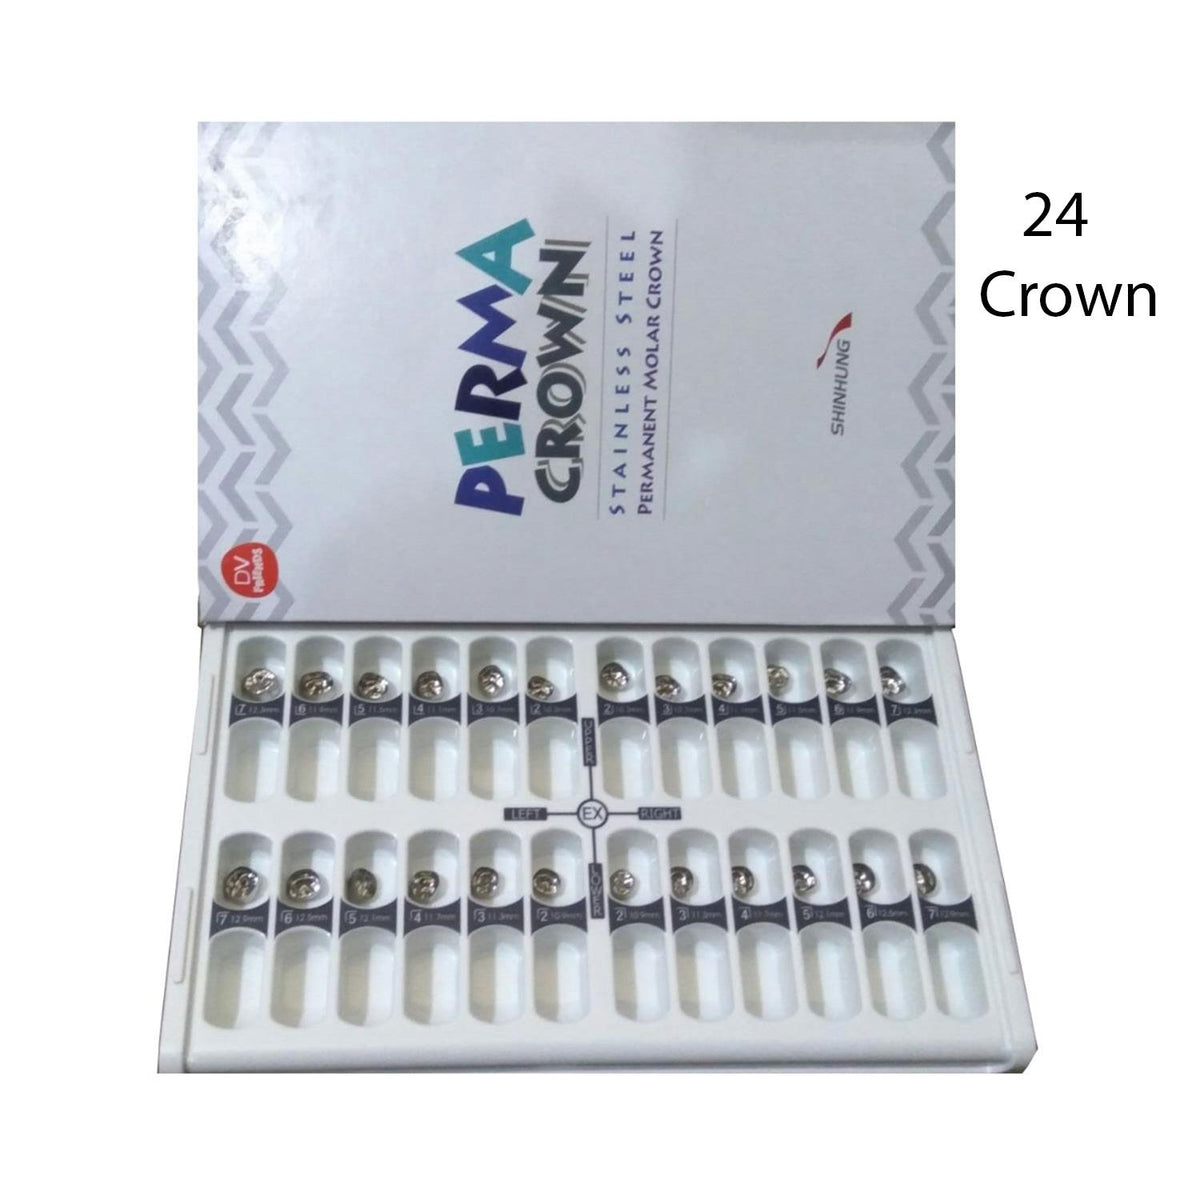 DentrealStore - Dentreal Perma Crown Permanent Molar Crown Kit (48 Crowns)